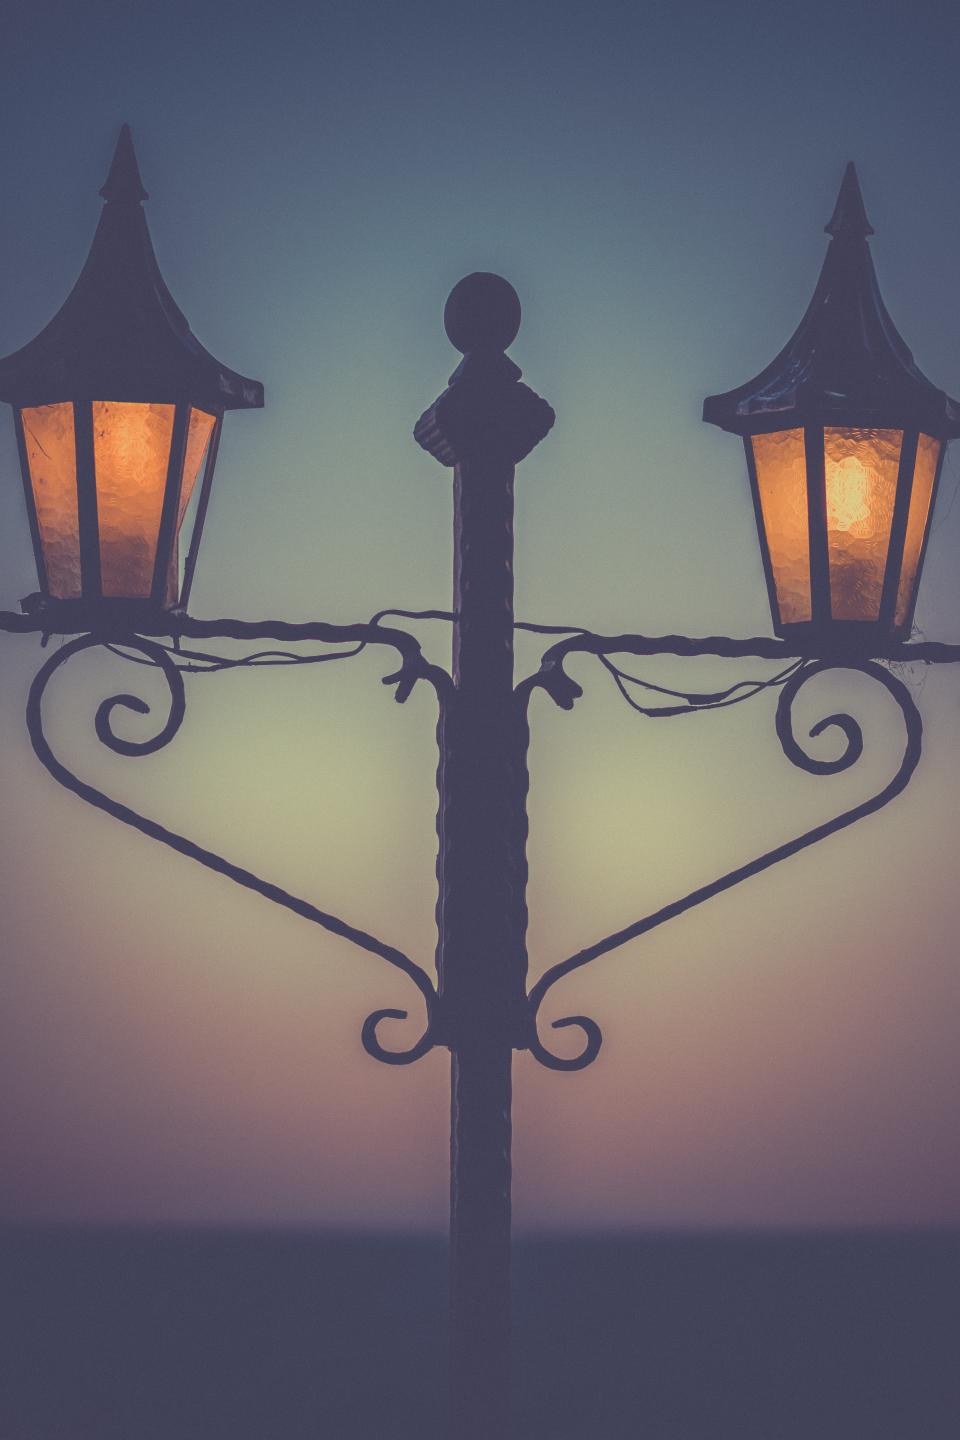 Street Lights Lamp Posts